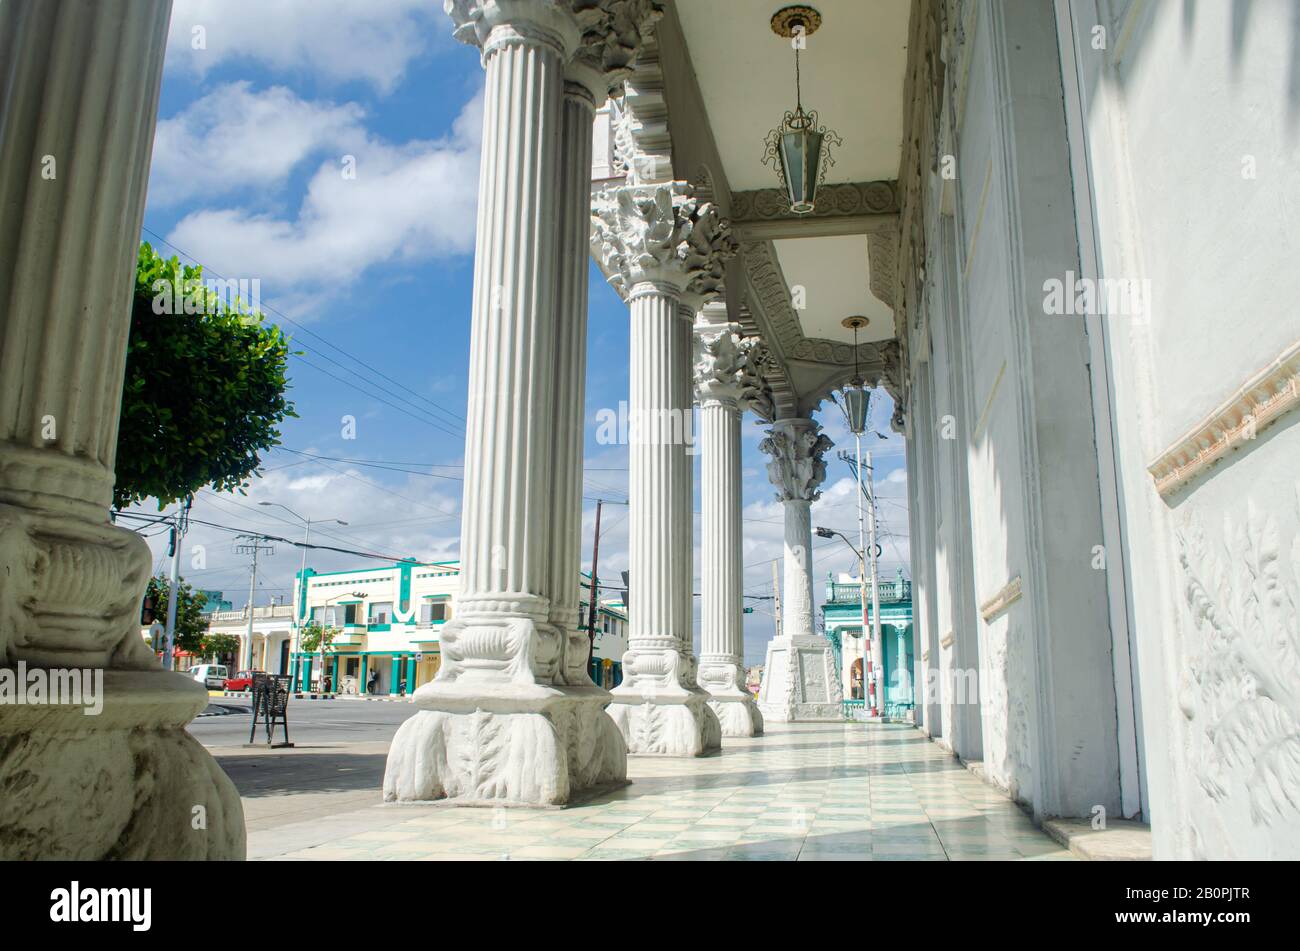 The Palacio de Guasch hall of column in Pinar del Río. Stock Photo